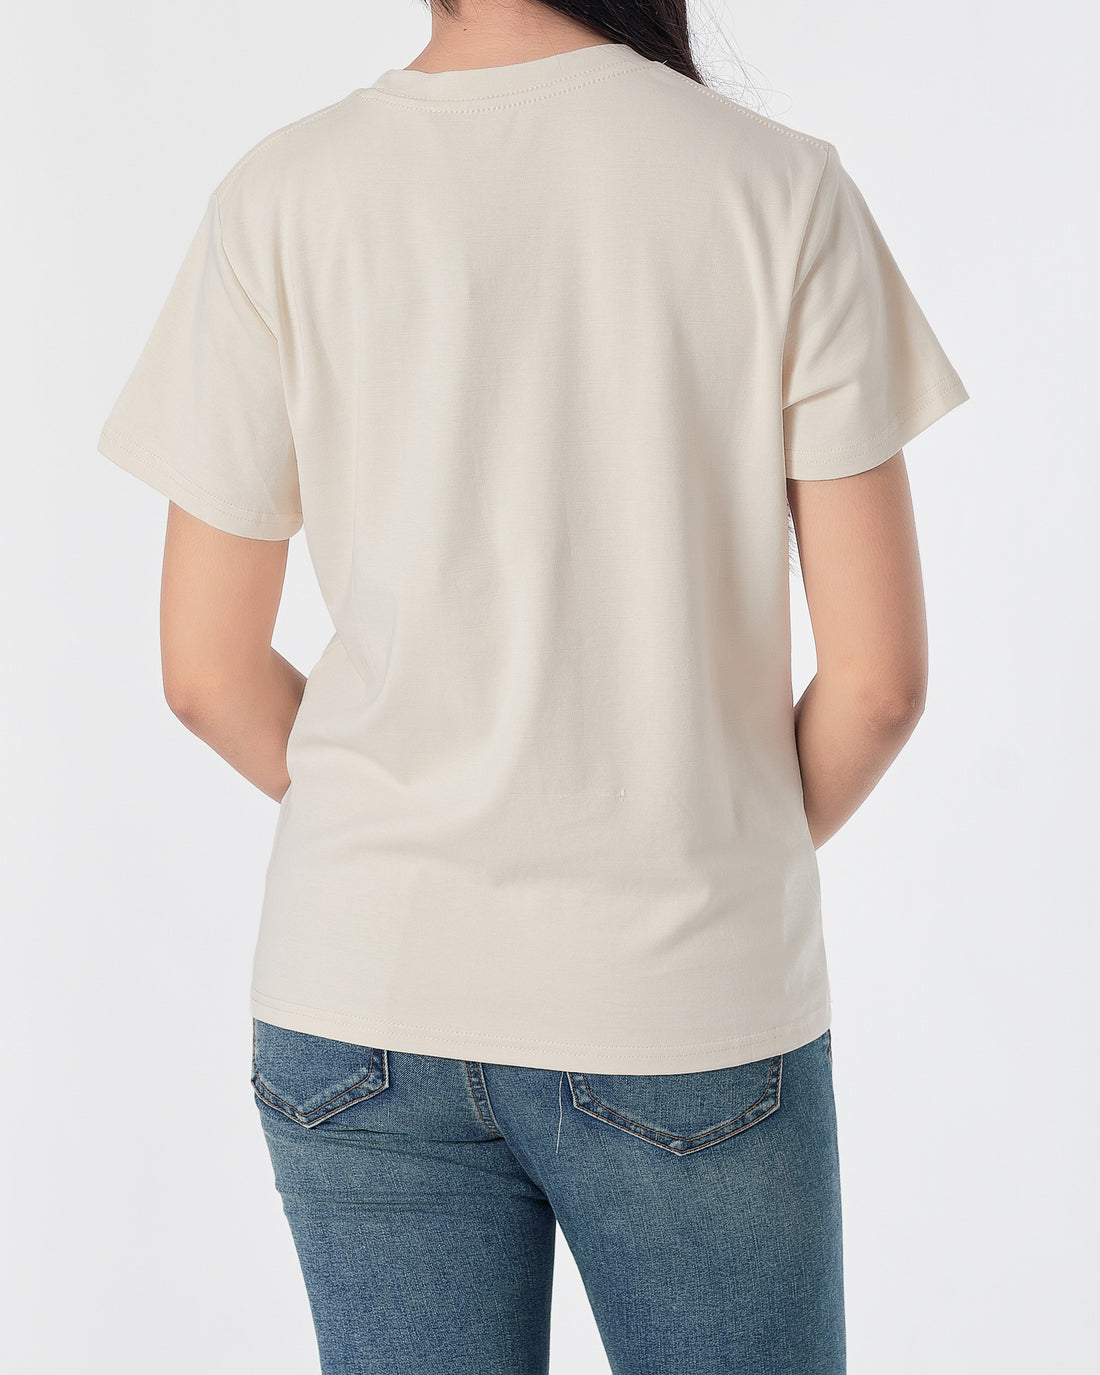 MIU Rhinestone Neck Chain Lady Cream  T-Shirt 27.90